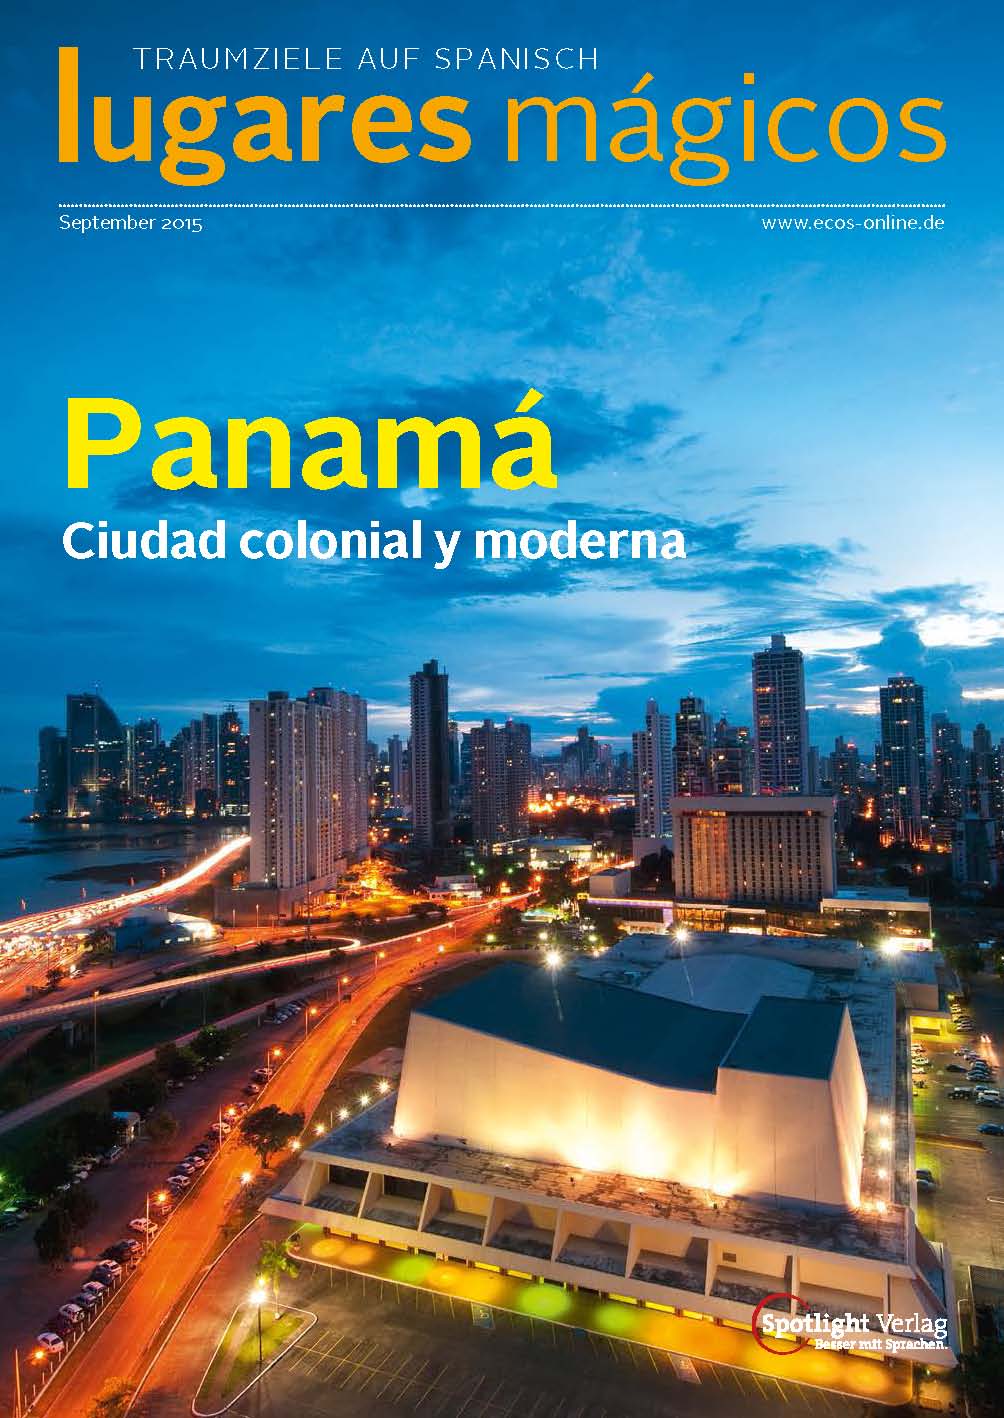 Lugares Magicos Panama_Ecos2015 © M.M.